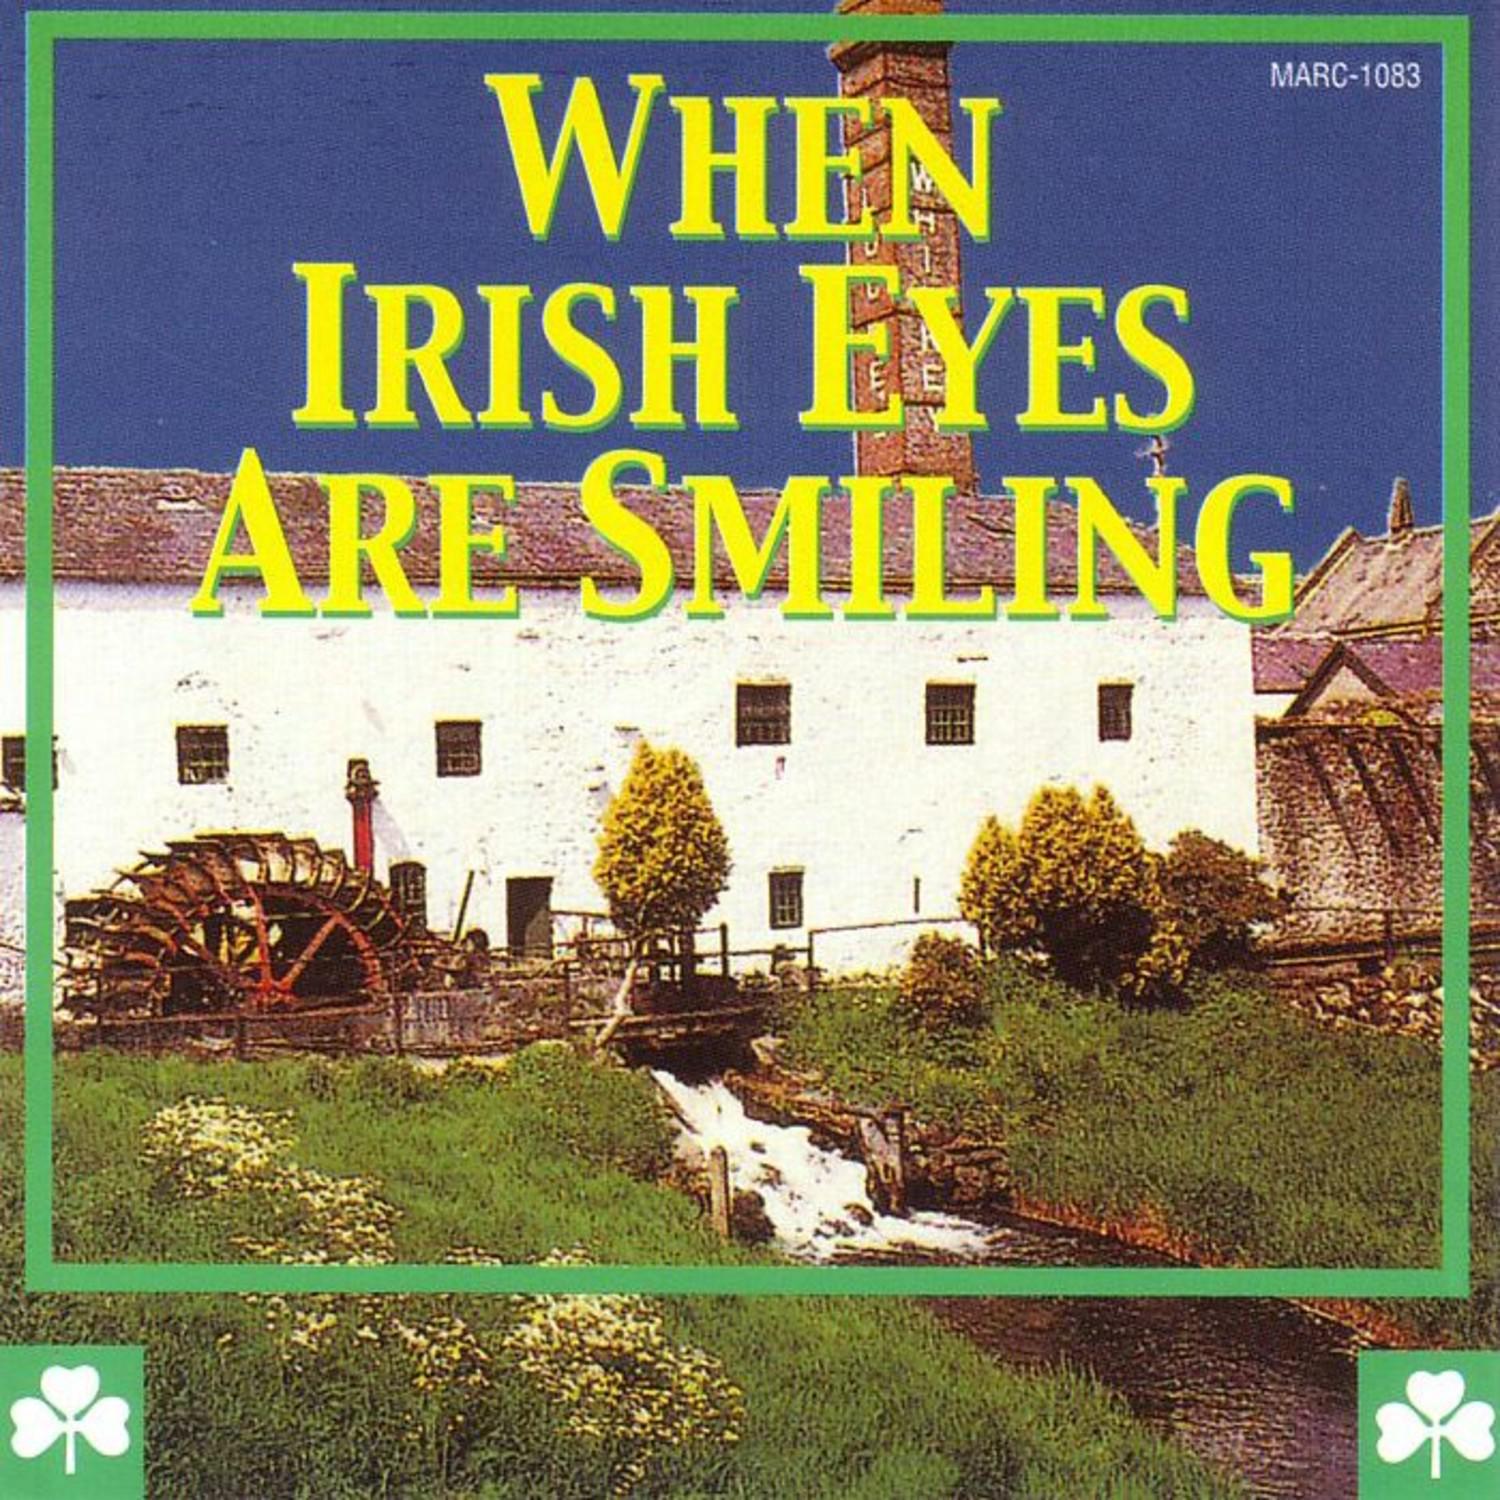 When Irish Eyes Are Smiling